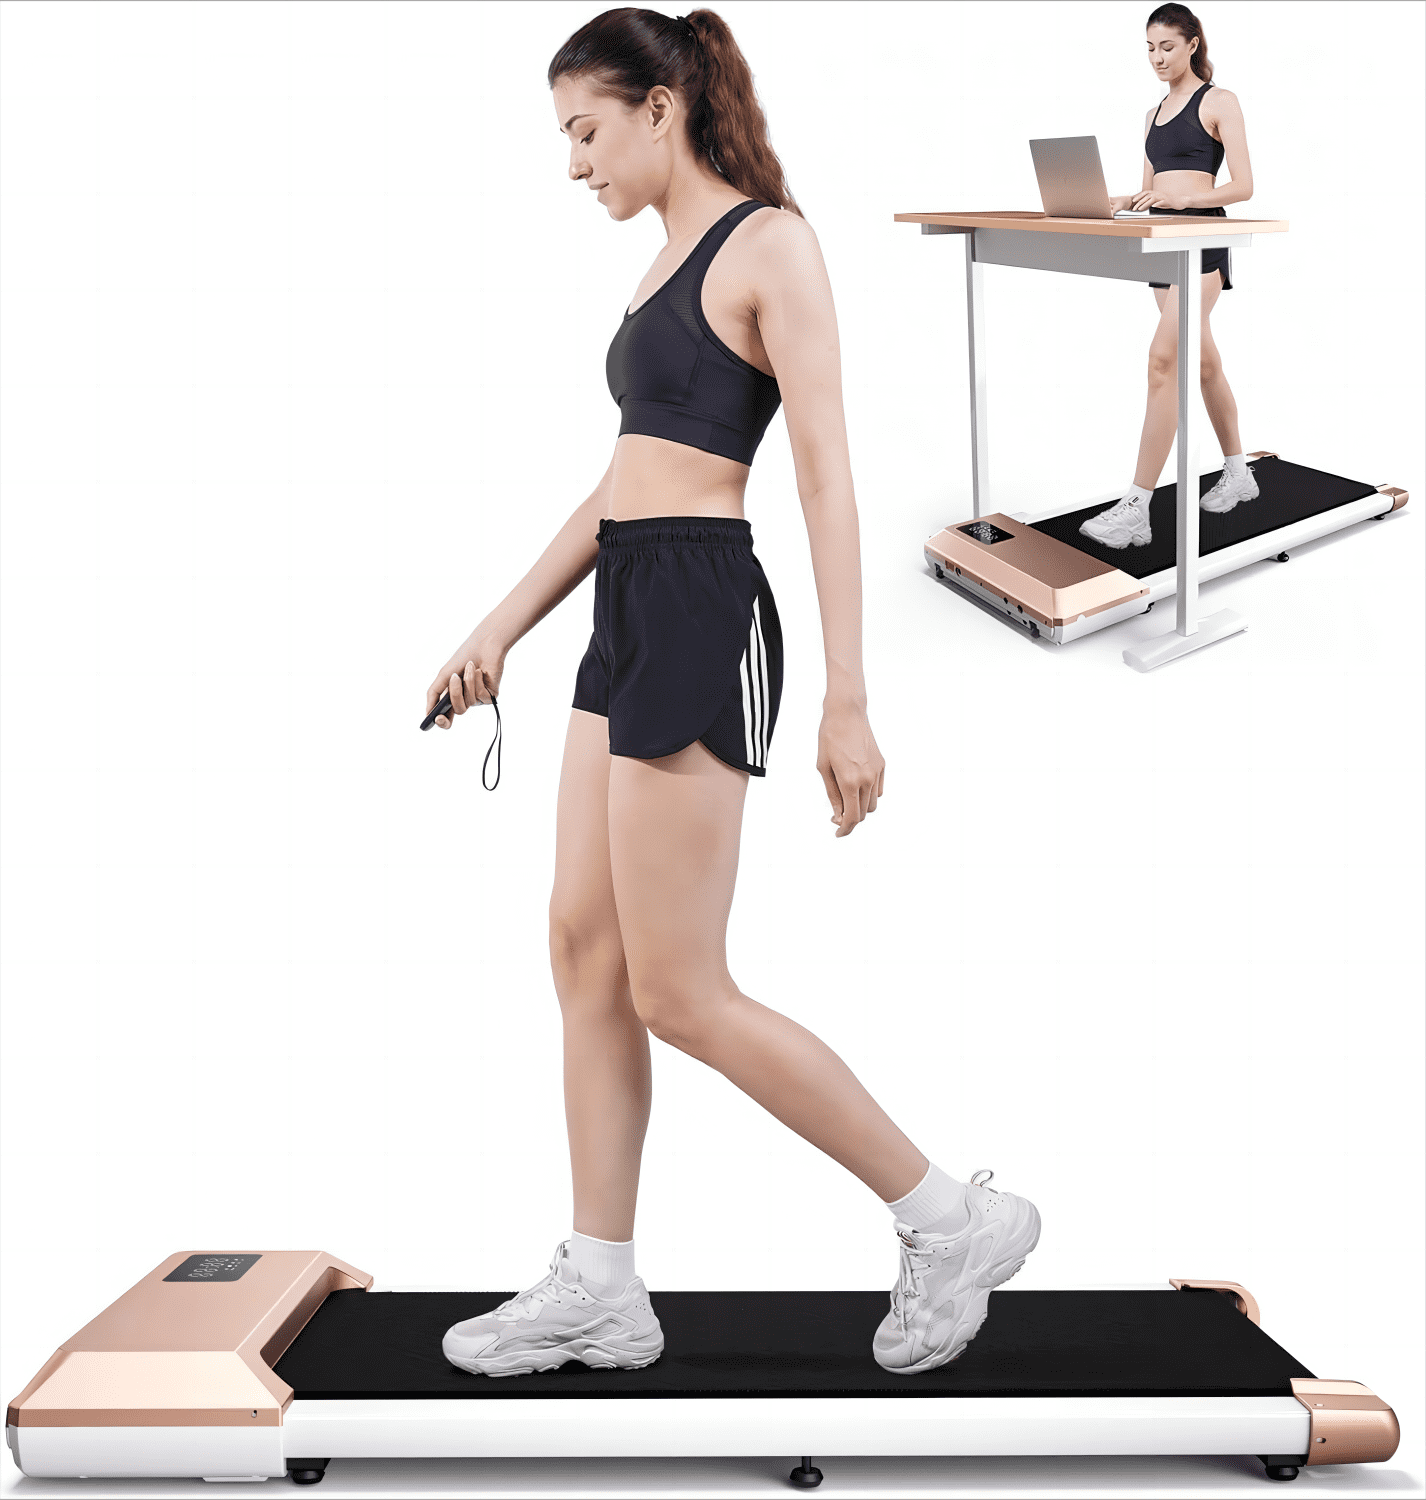 Superun Walking Pad Treadmill 2.5Hp, Ultra-Quiet with Remote Control-Under Desk Treadmill 2 in 1 Walking and Jogging with Remote Control LED Display(Pink)